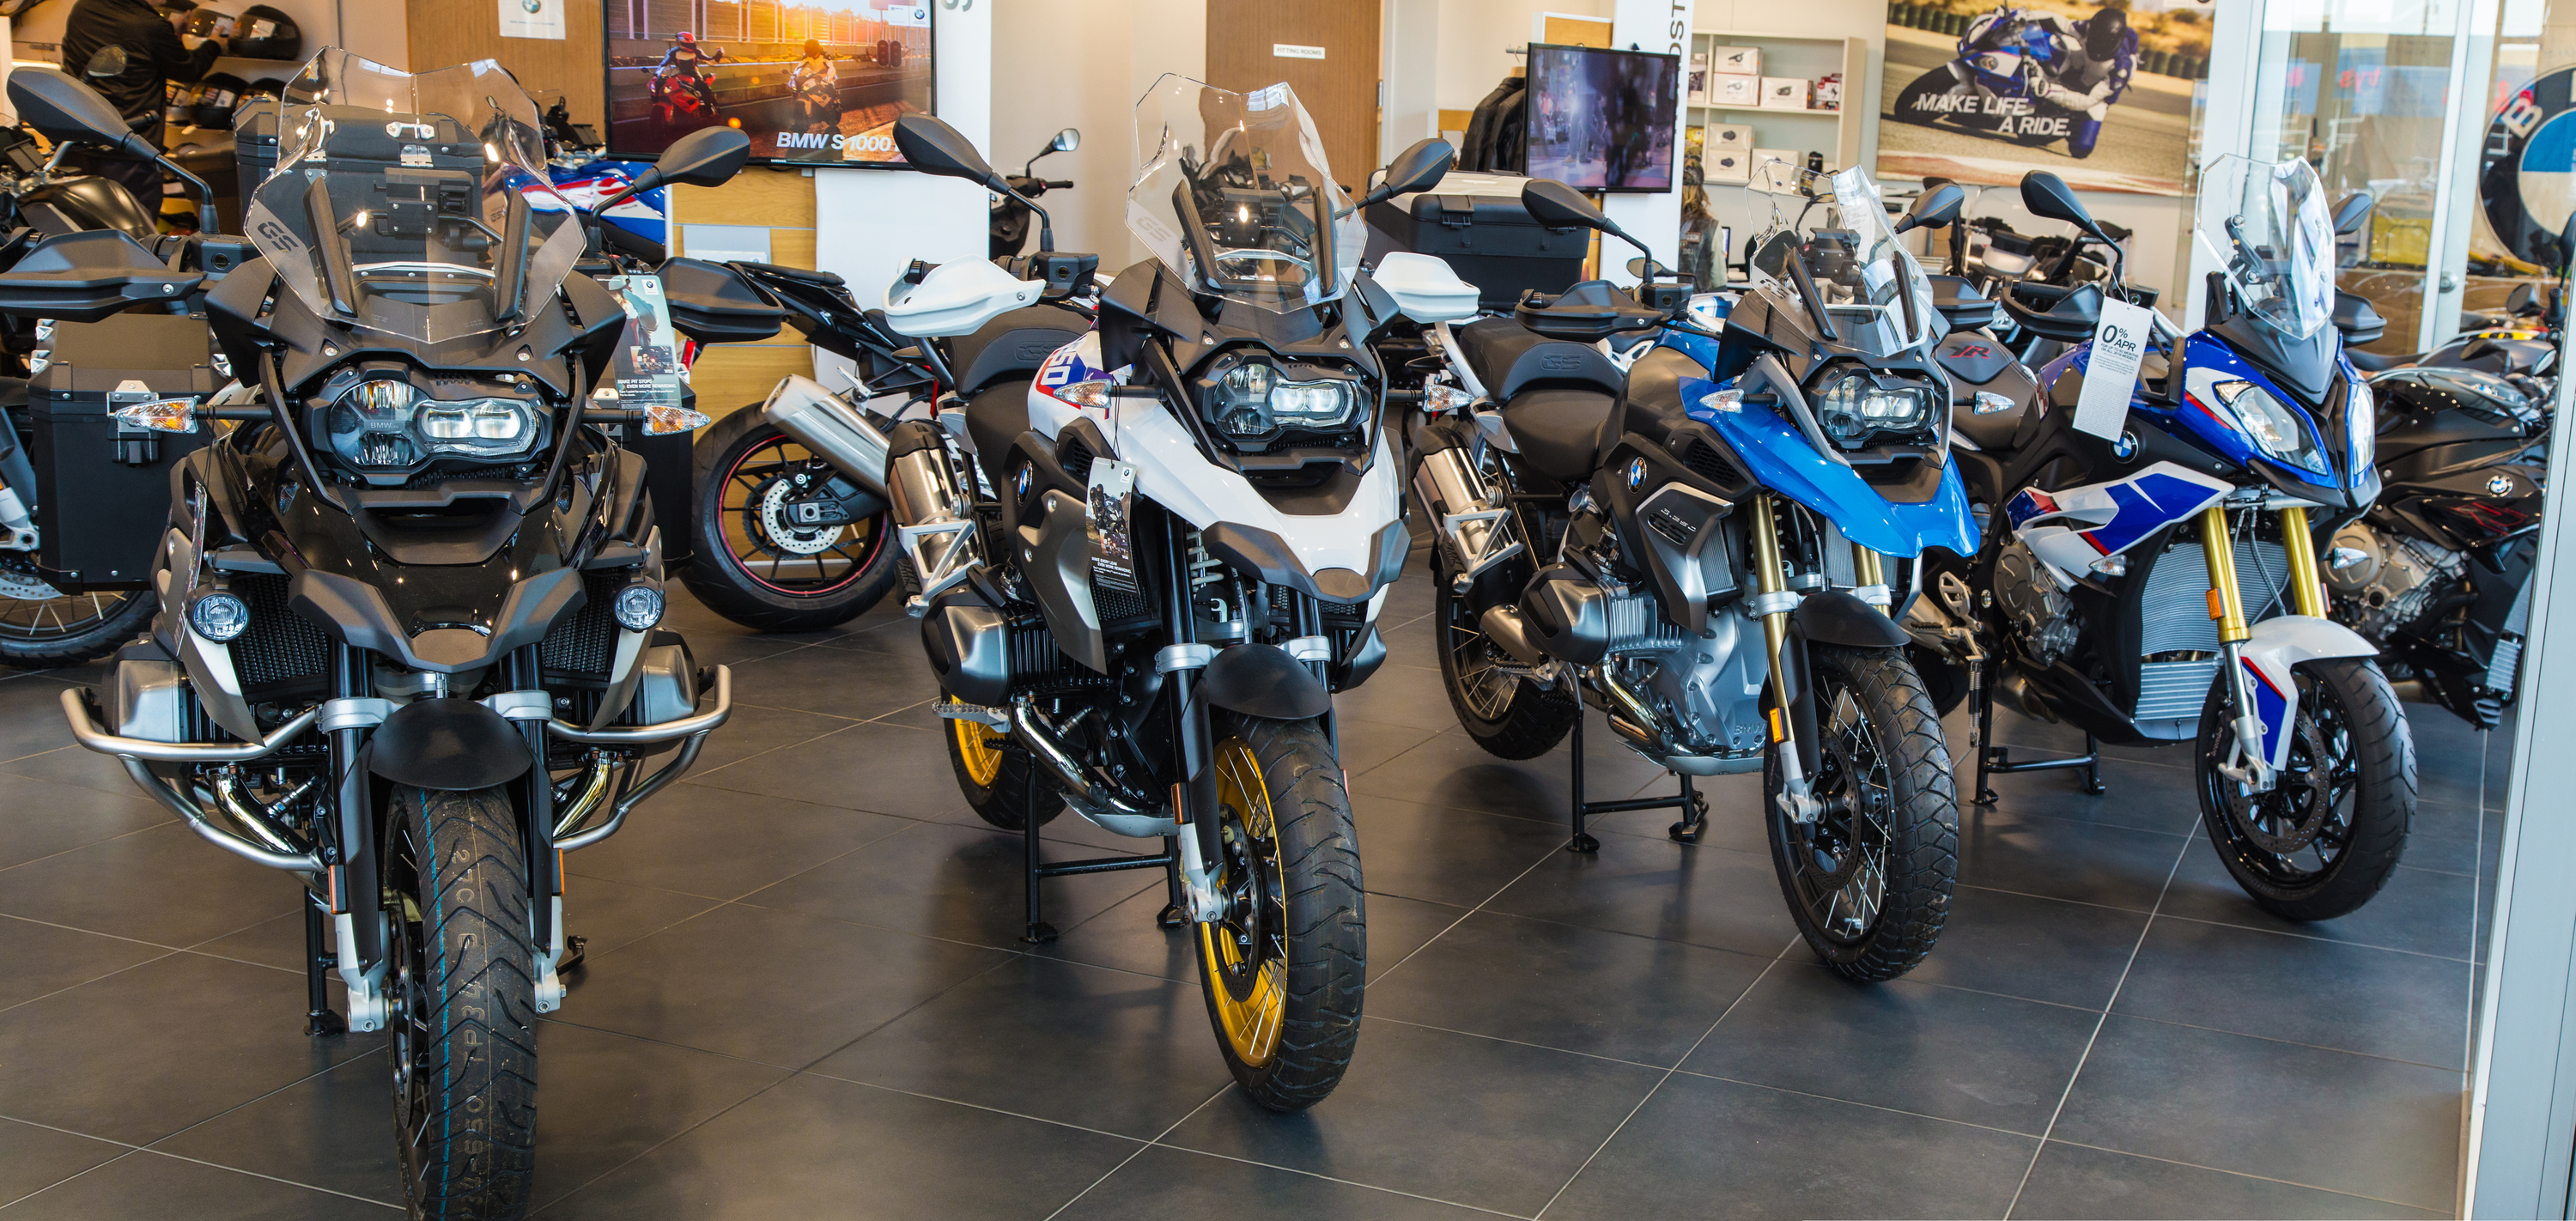 Photo Gallery | BMW Motorcycles of Richfield Minnesota